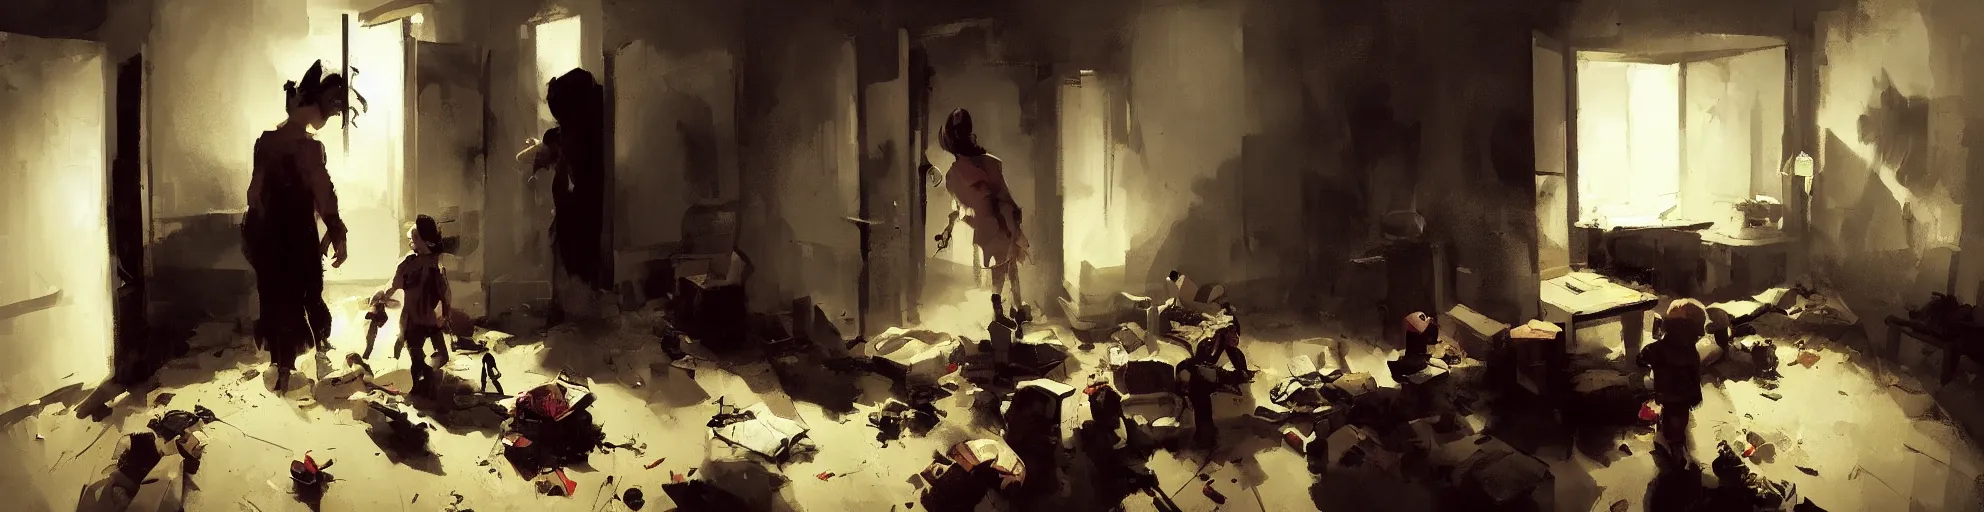 Prompt: a kid entering in a hoarder's room, dark atmosphere. by sergey kolesov and phil hale